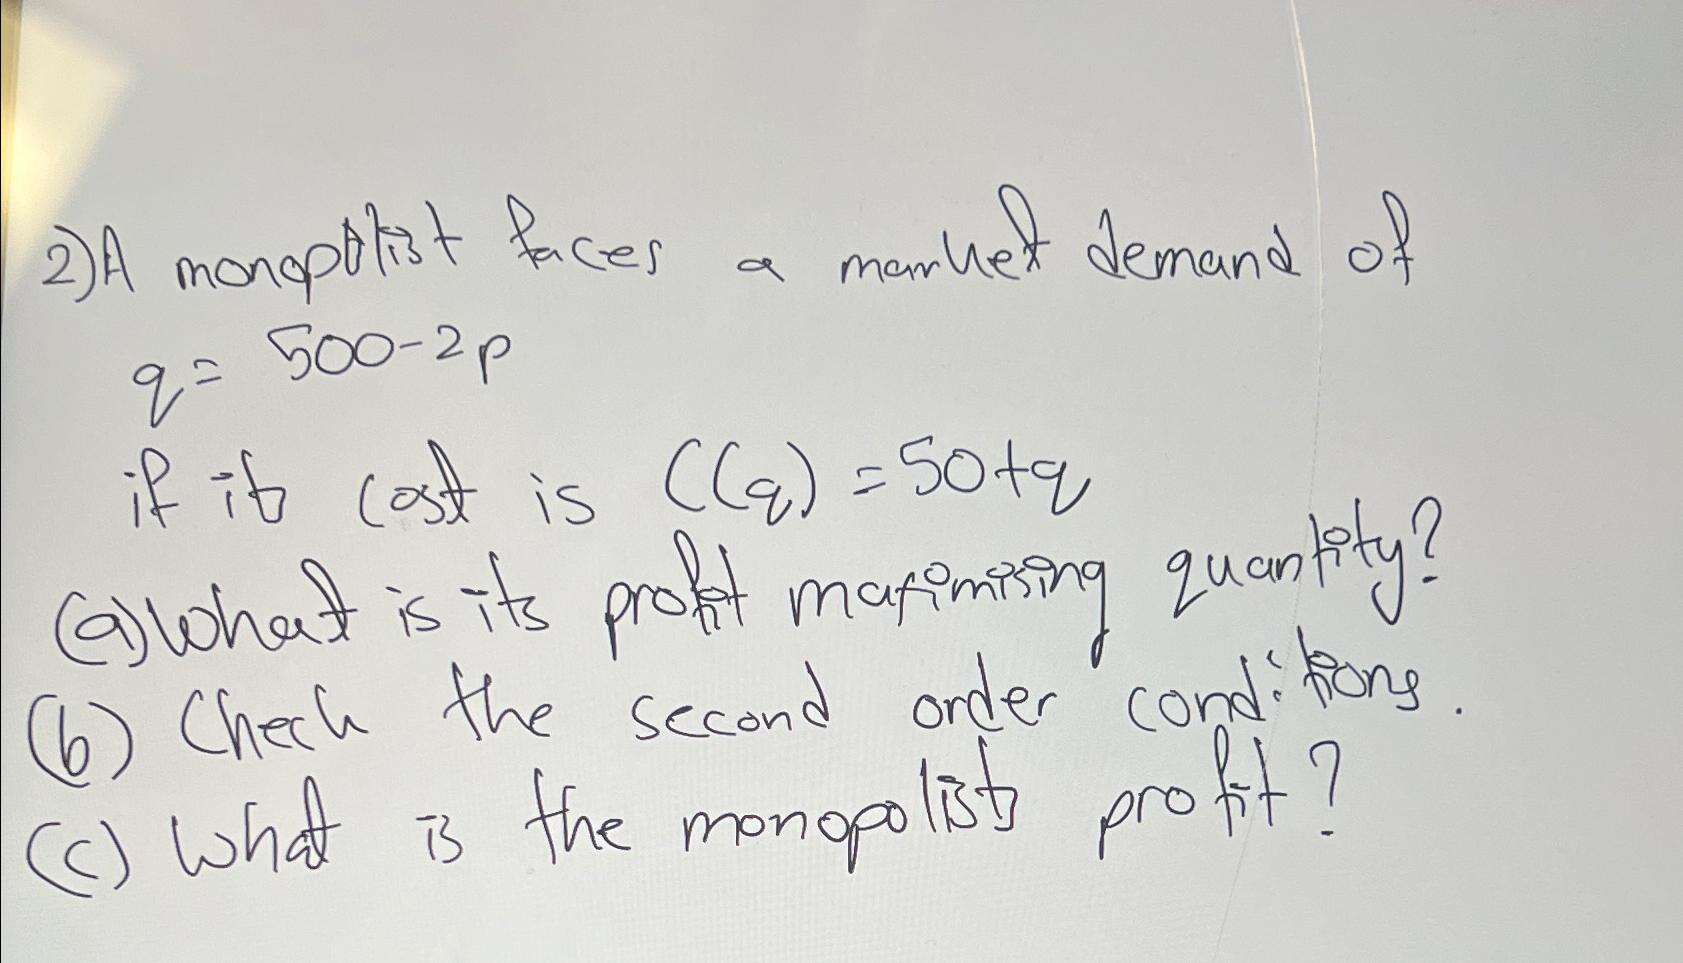 Solved A monoptist faces a market demand ofq=500-2pif it | Chegg.com